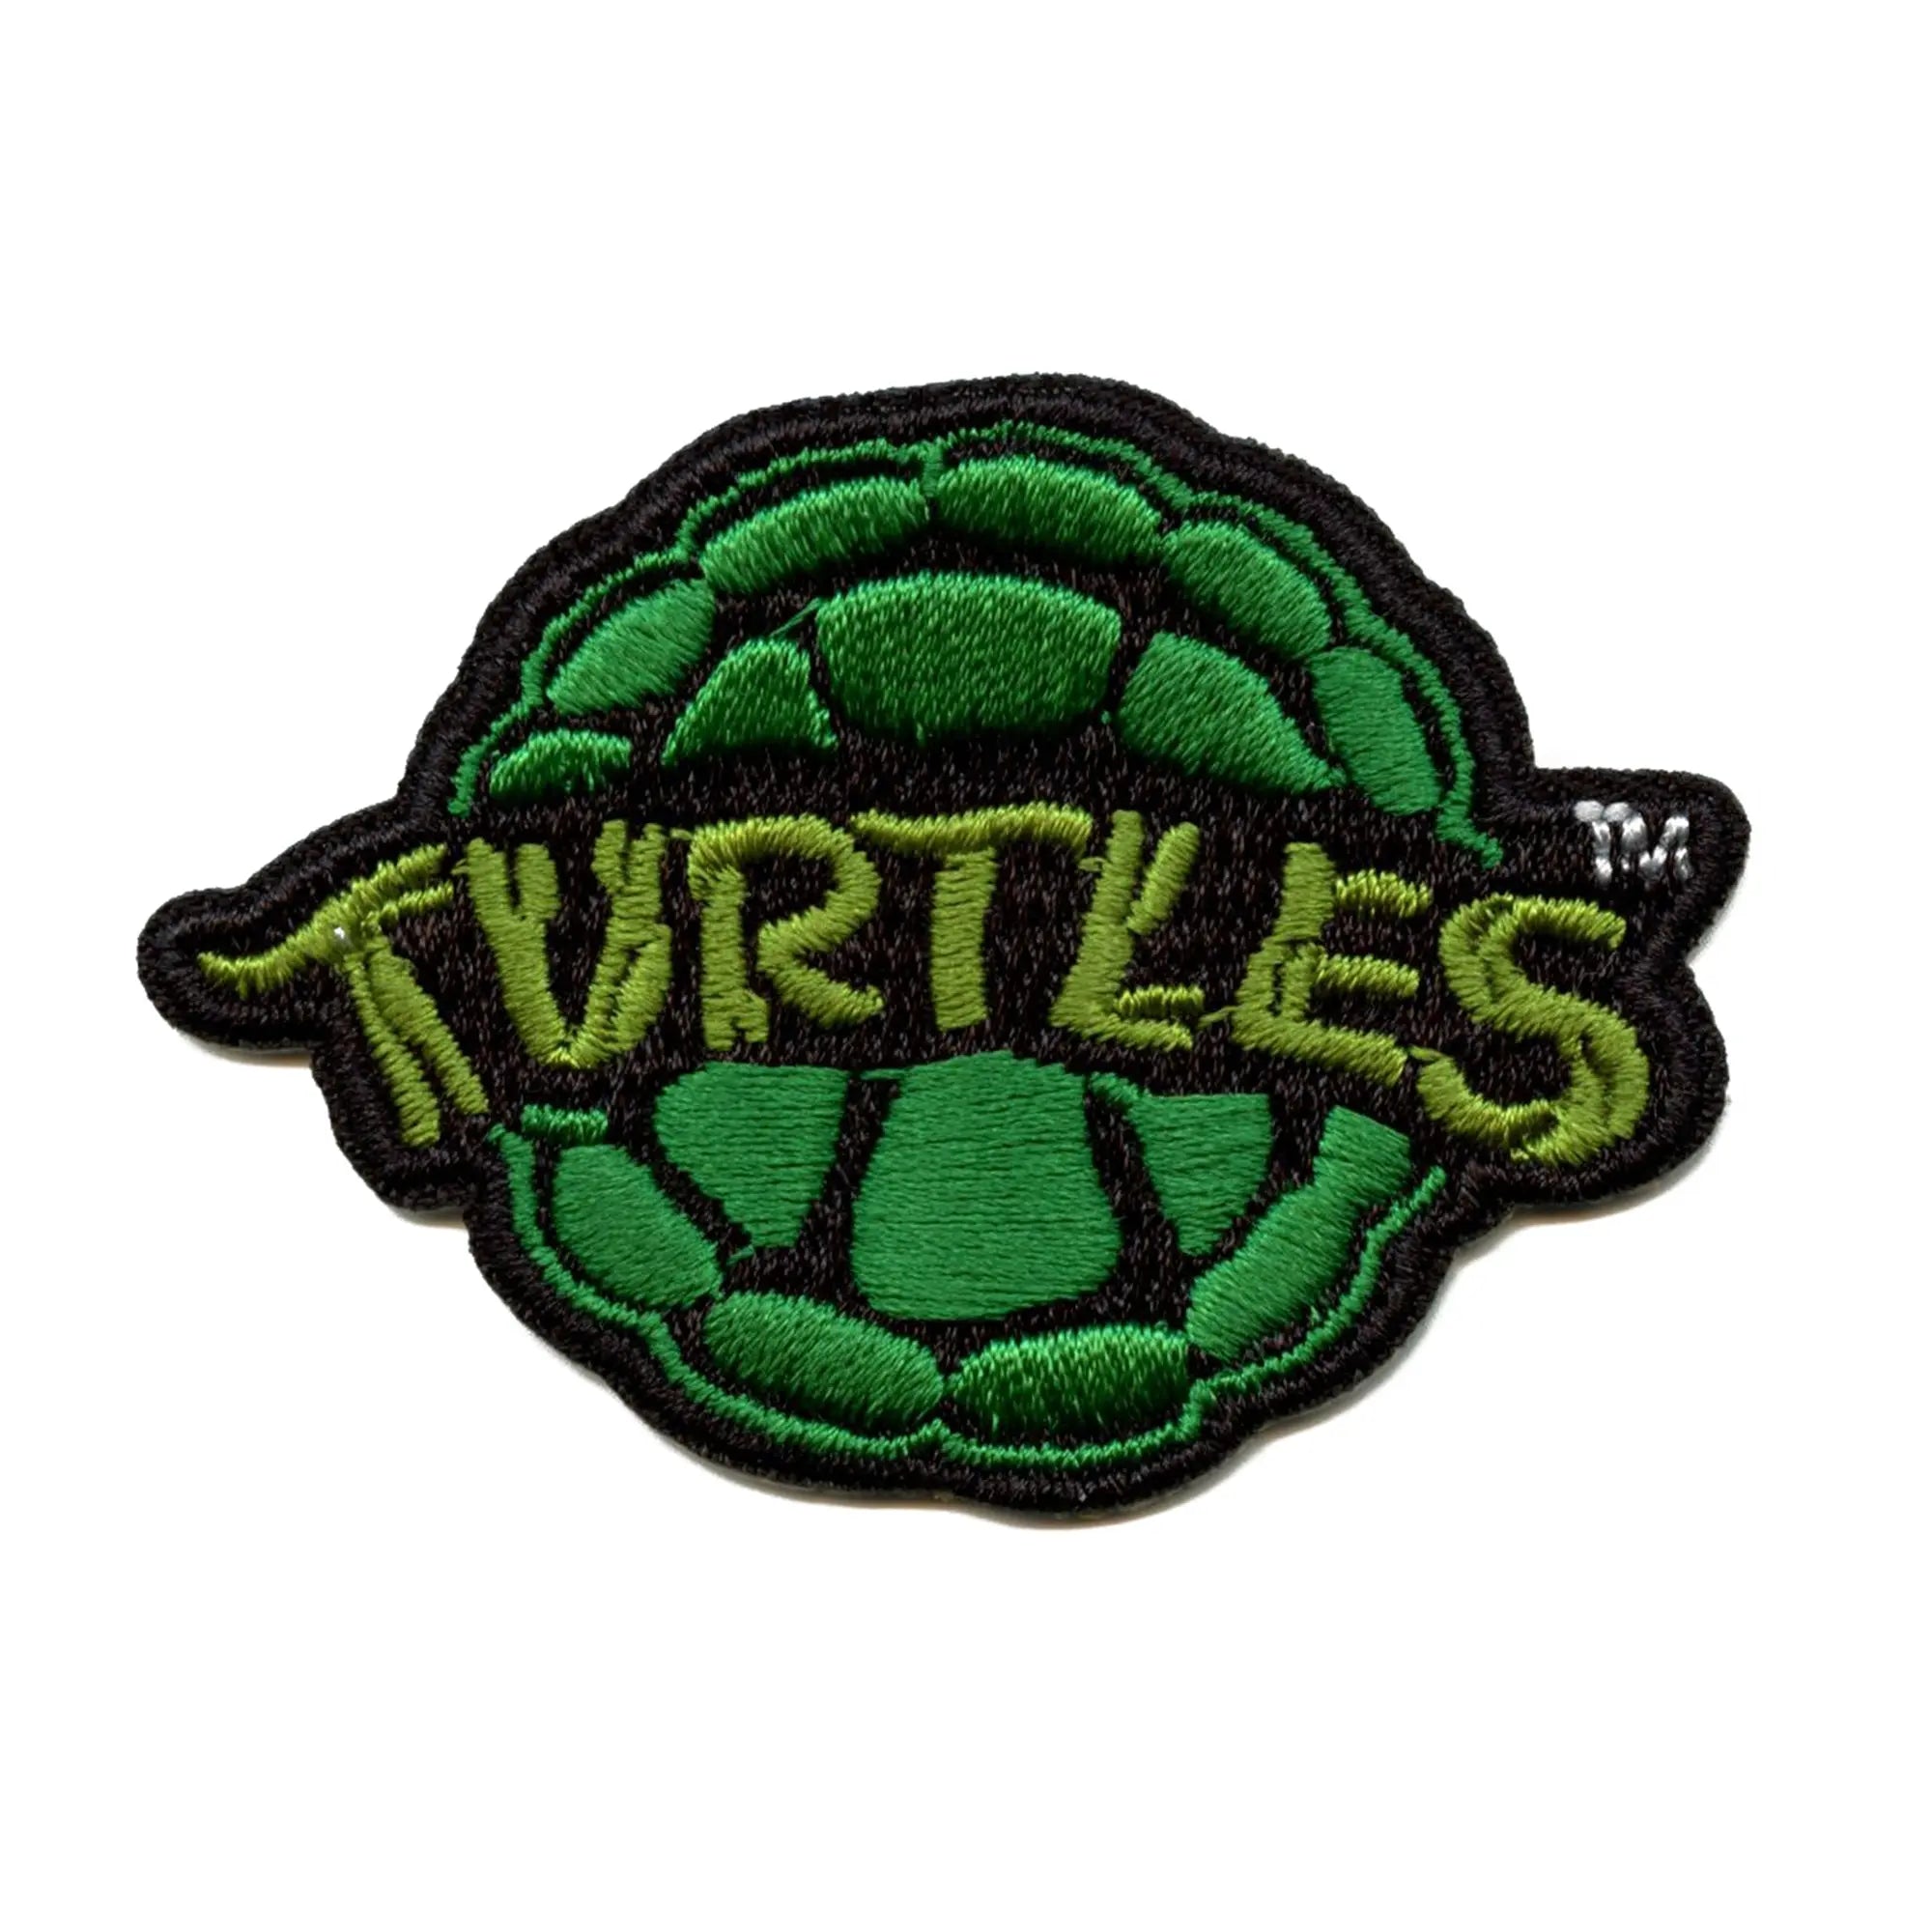 TMNT Patch Teenage Mutant Ninja Turtles Patch Turtle Shell Patch